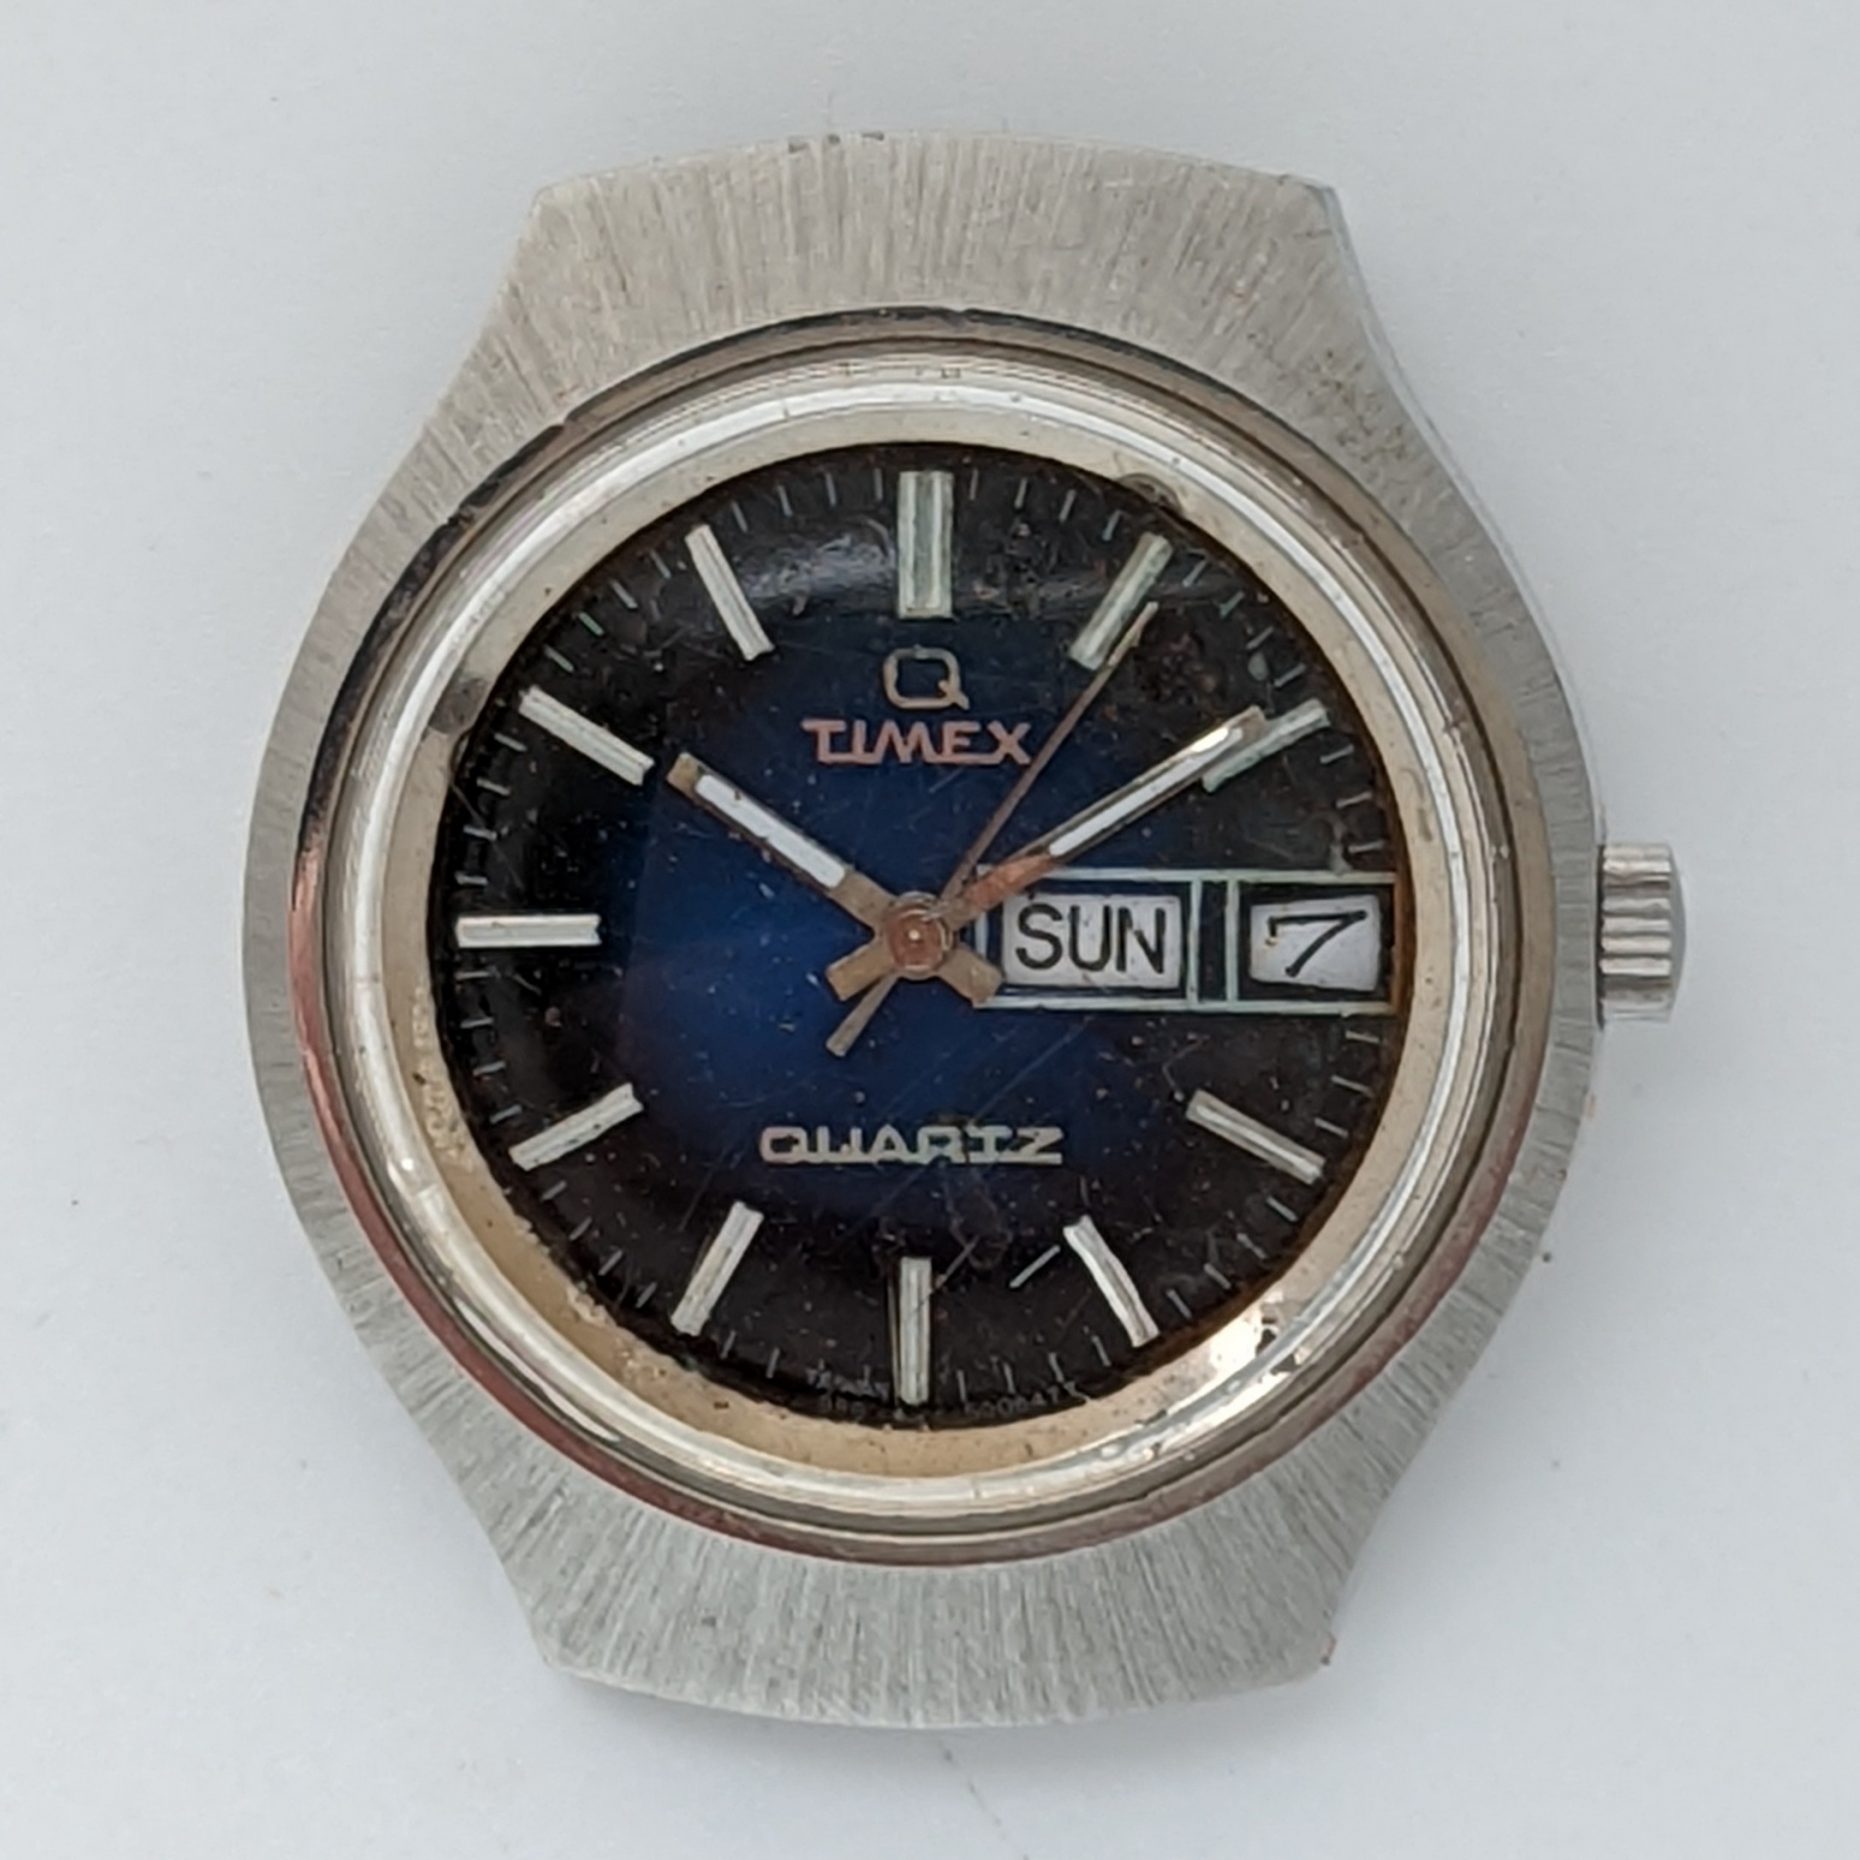 Timex Q Quartz 98850 06477 [1977]